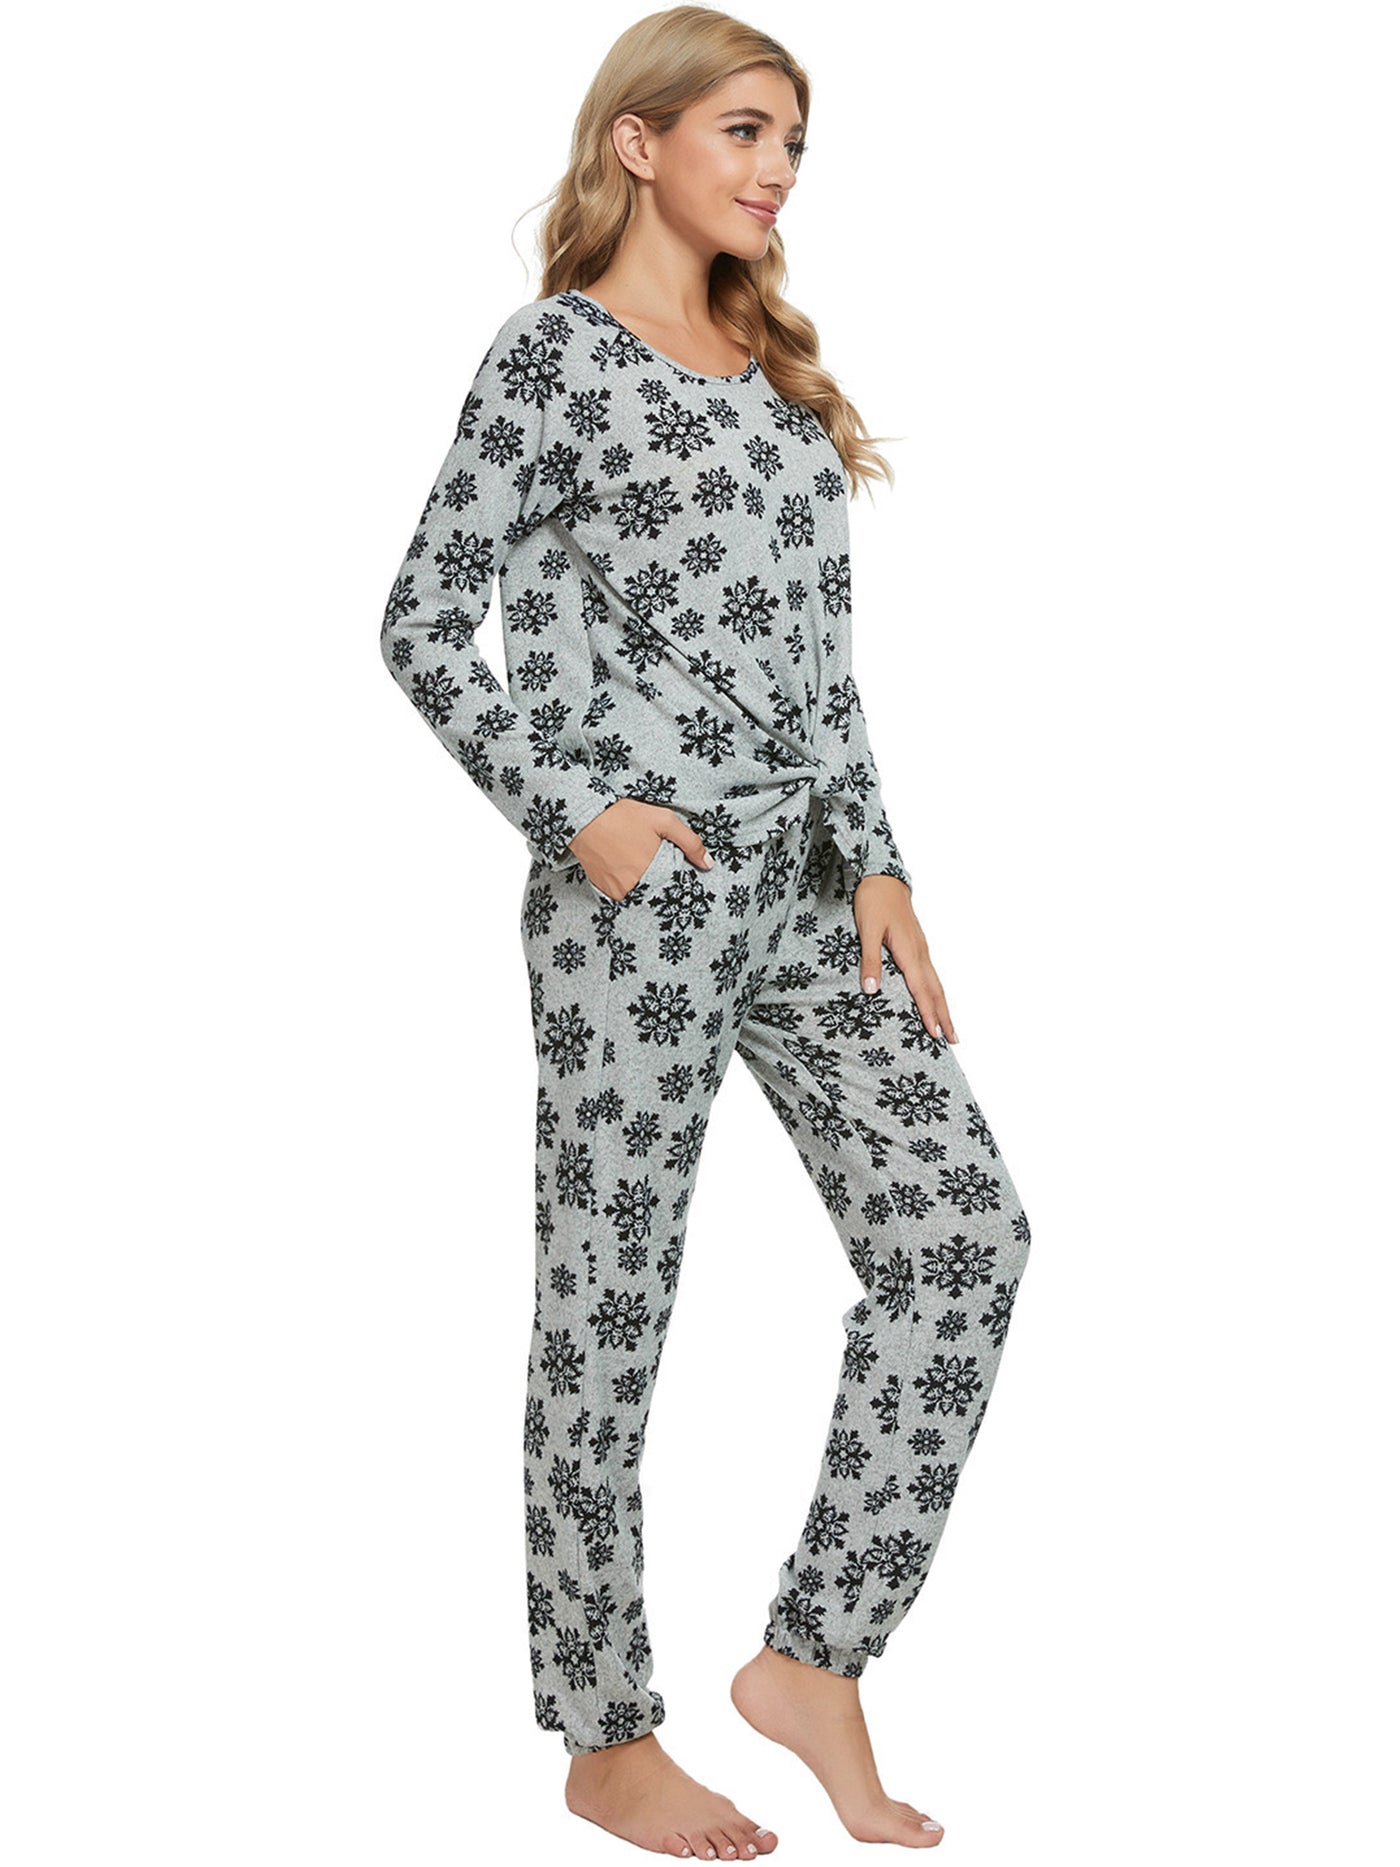 Bublédon Women's Sleepwear Lounge Nightwear with Pockets Pajama Set